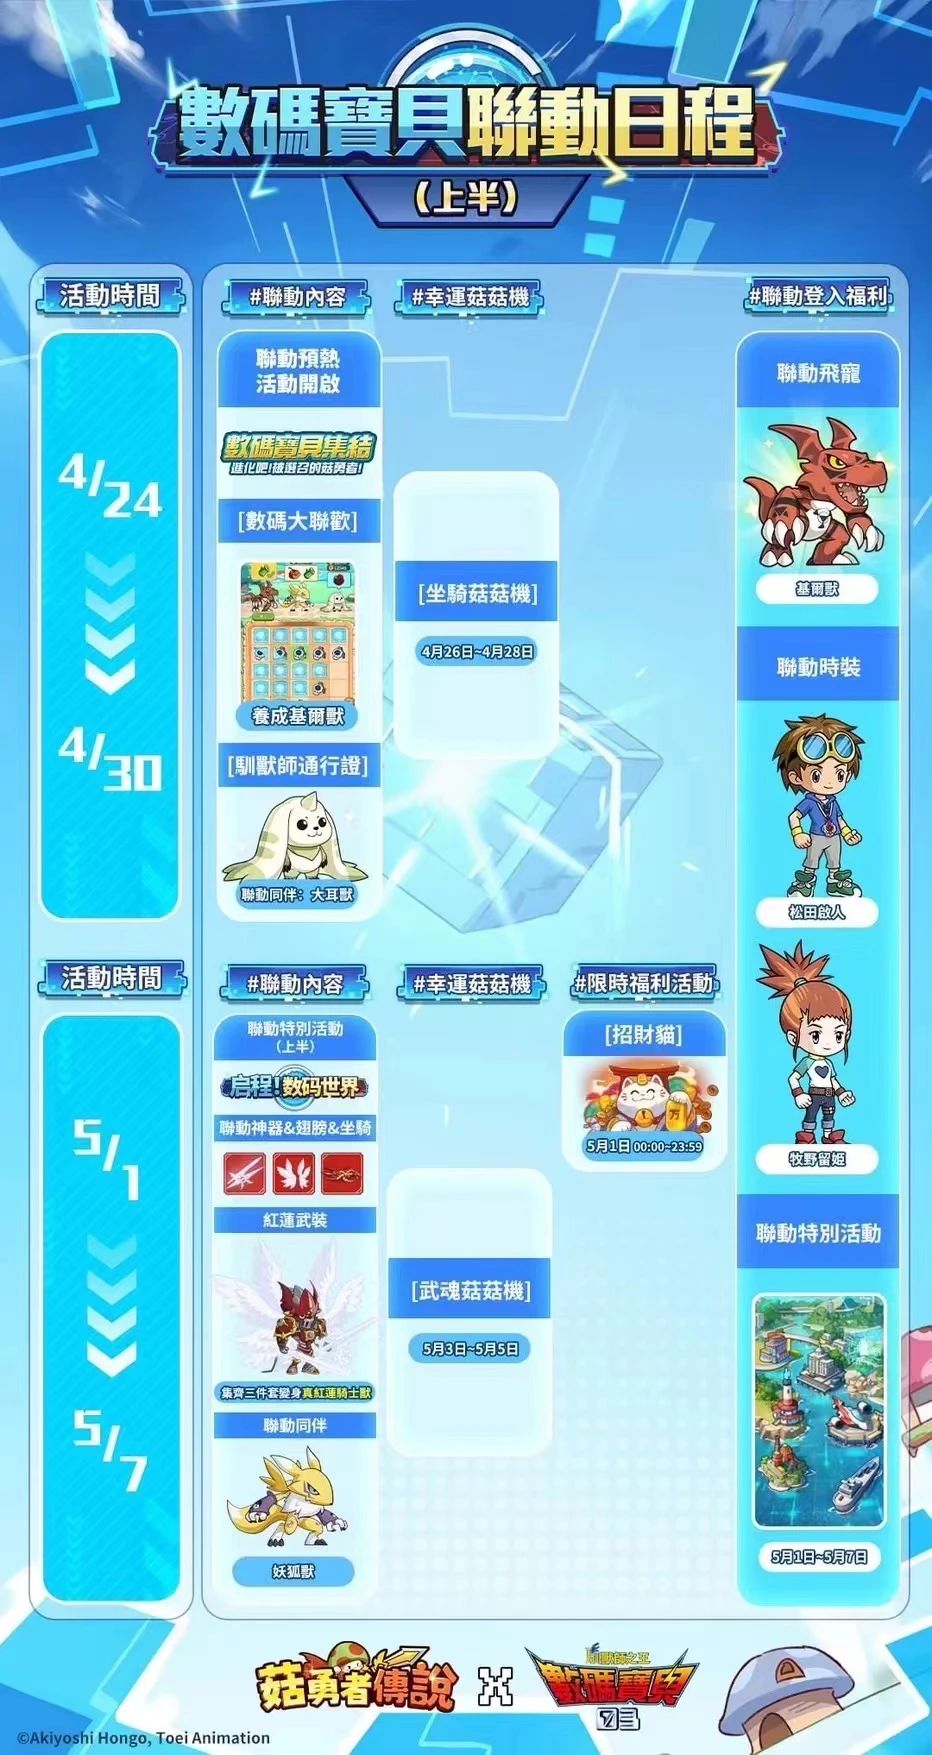 Adventure Battle Taiwan server Digimon event linkage schedule sharing